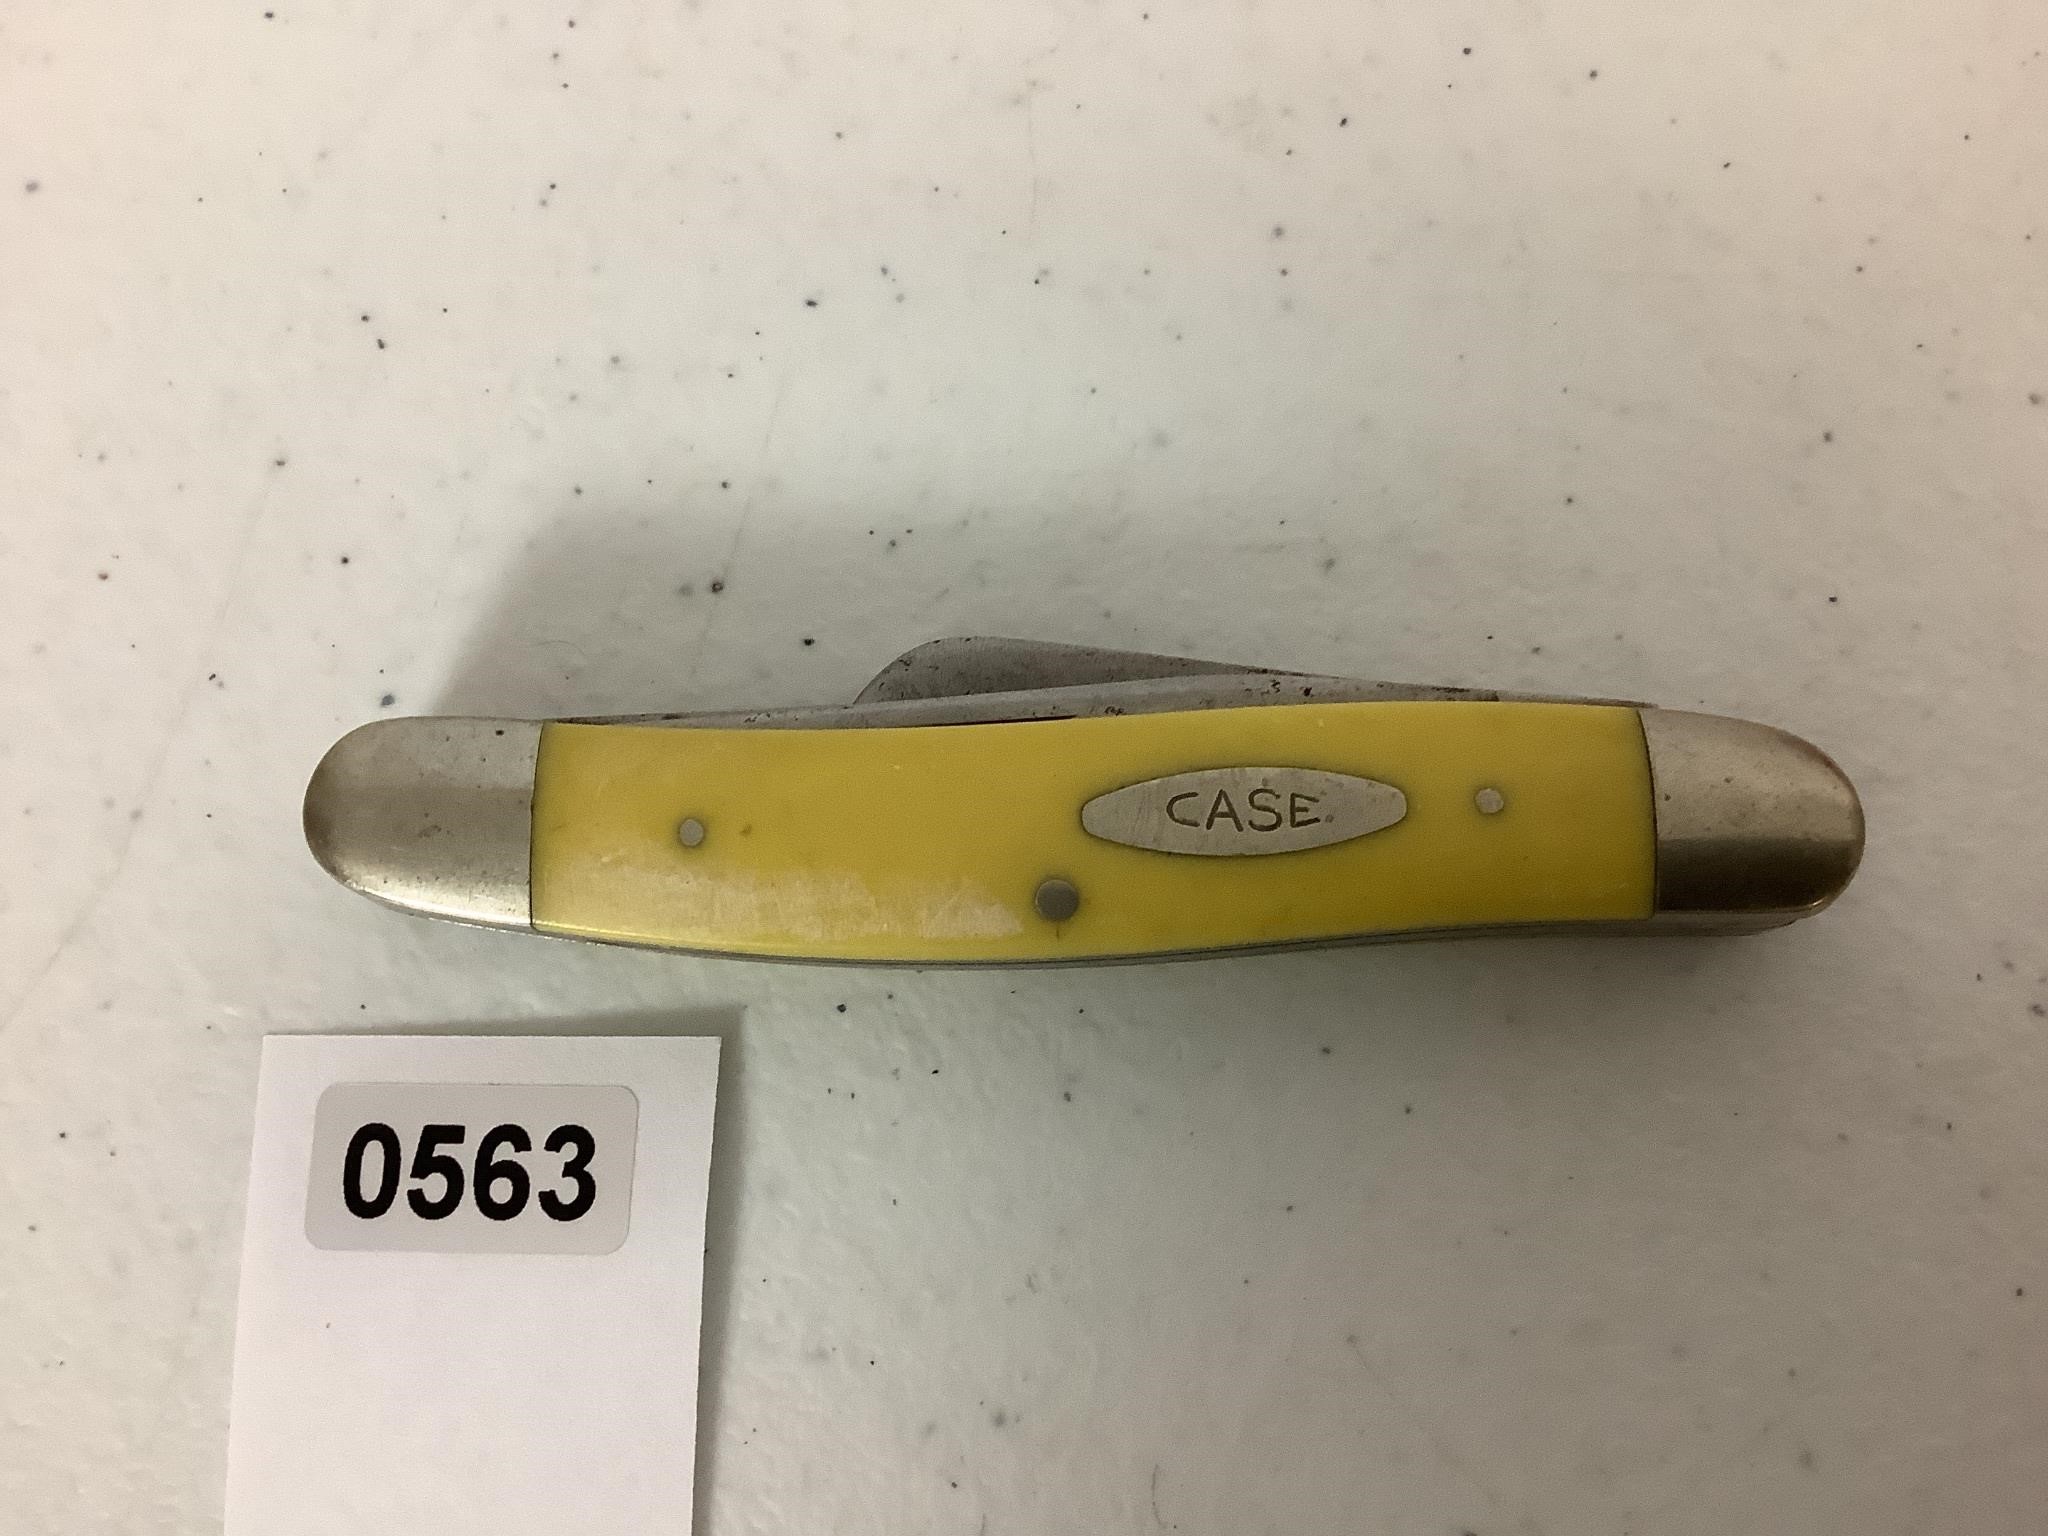 CASE XX KNIFE - 3318 H E